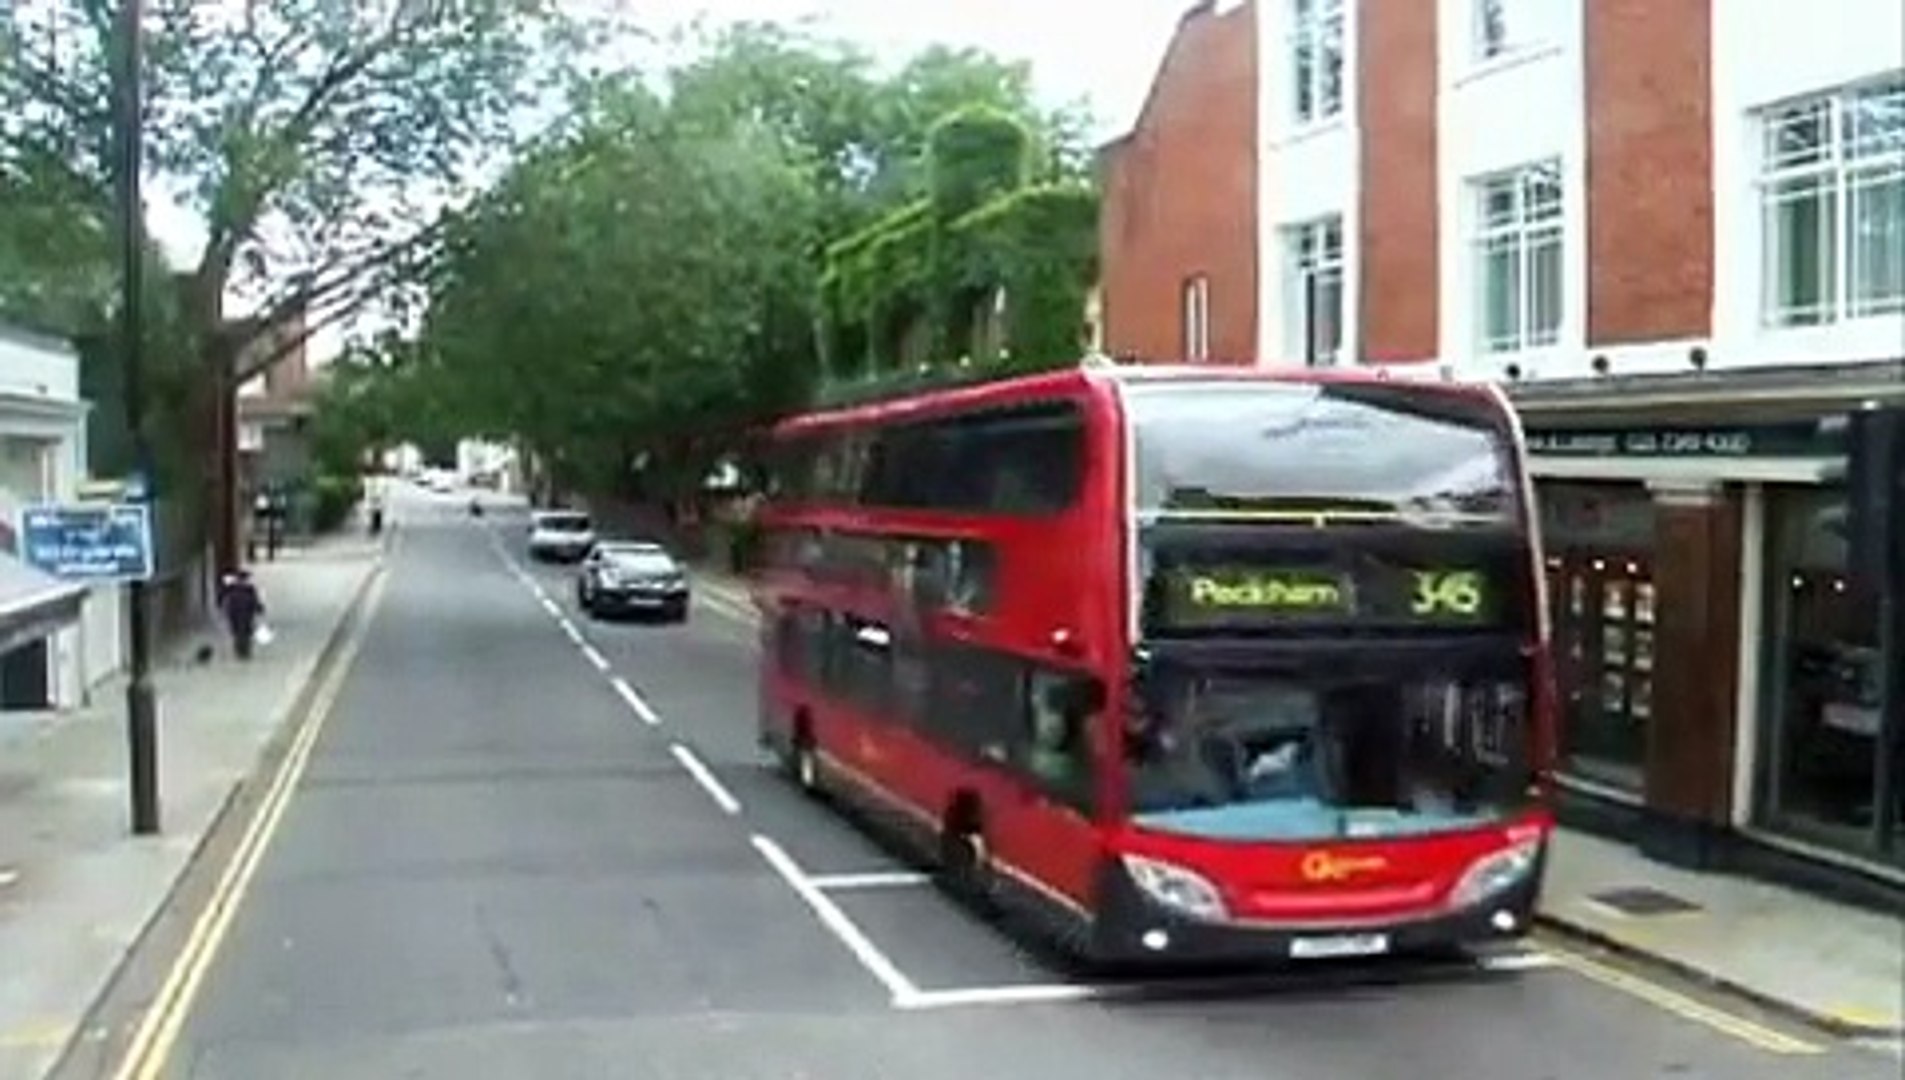 London Bus Route 49 - east london bus simulator roblox